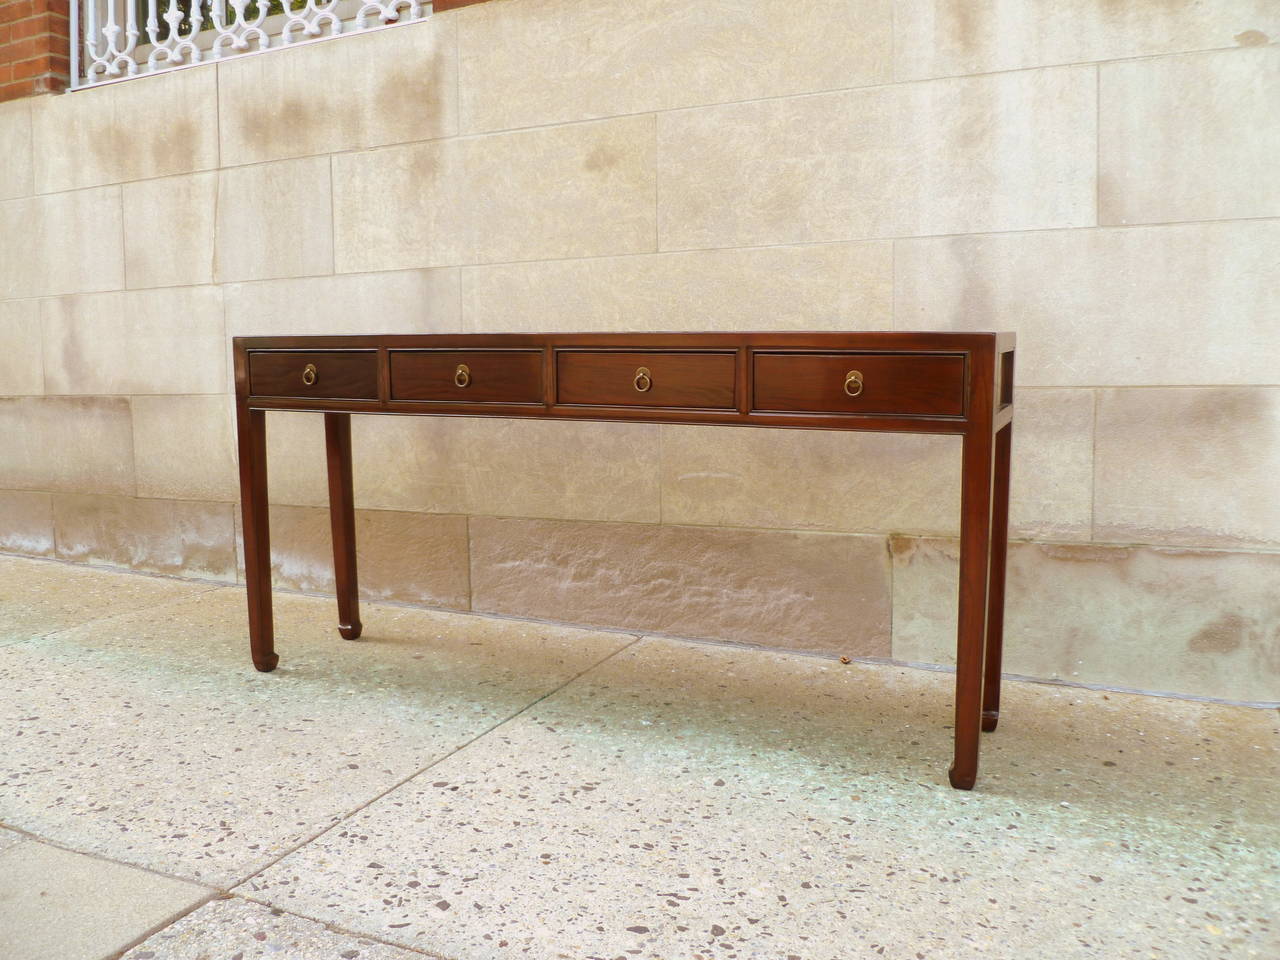 Polished Fine Ju Mu Wood Console Table with Four Drawers